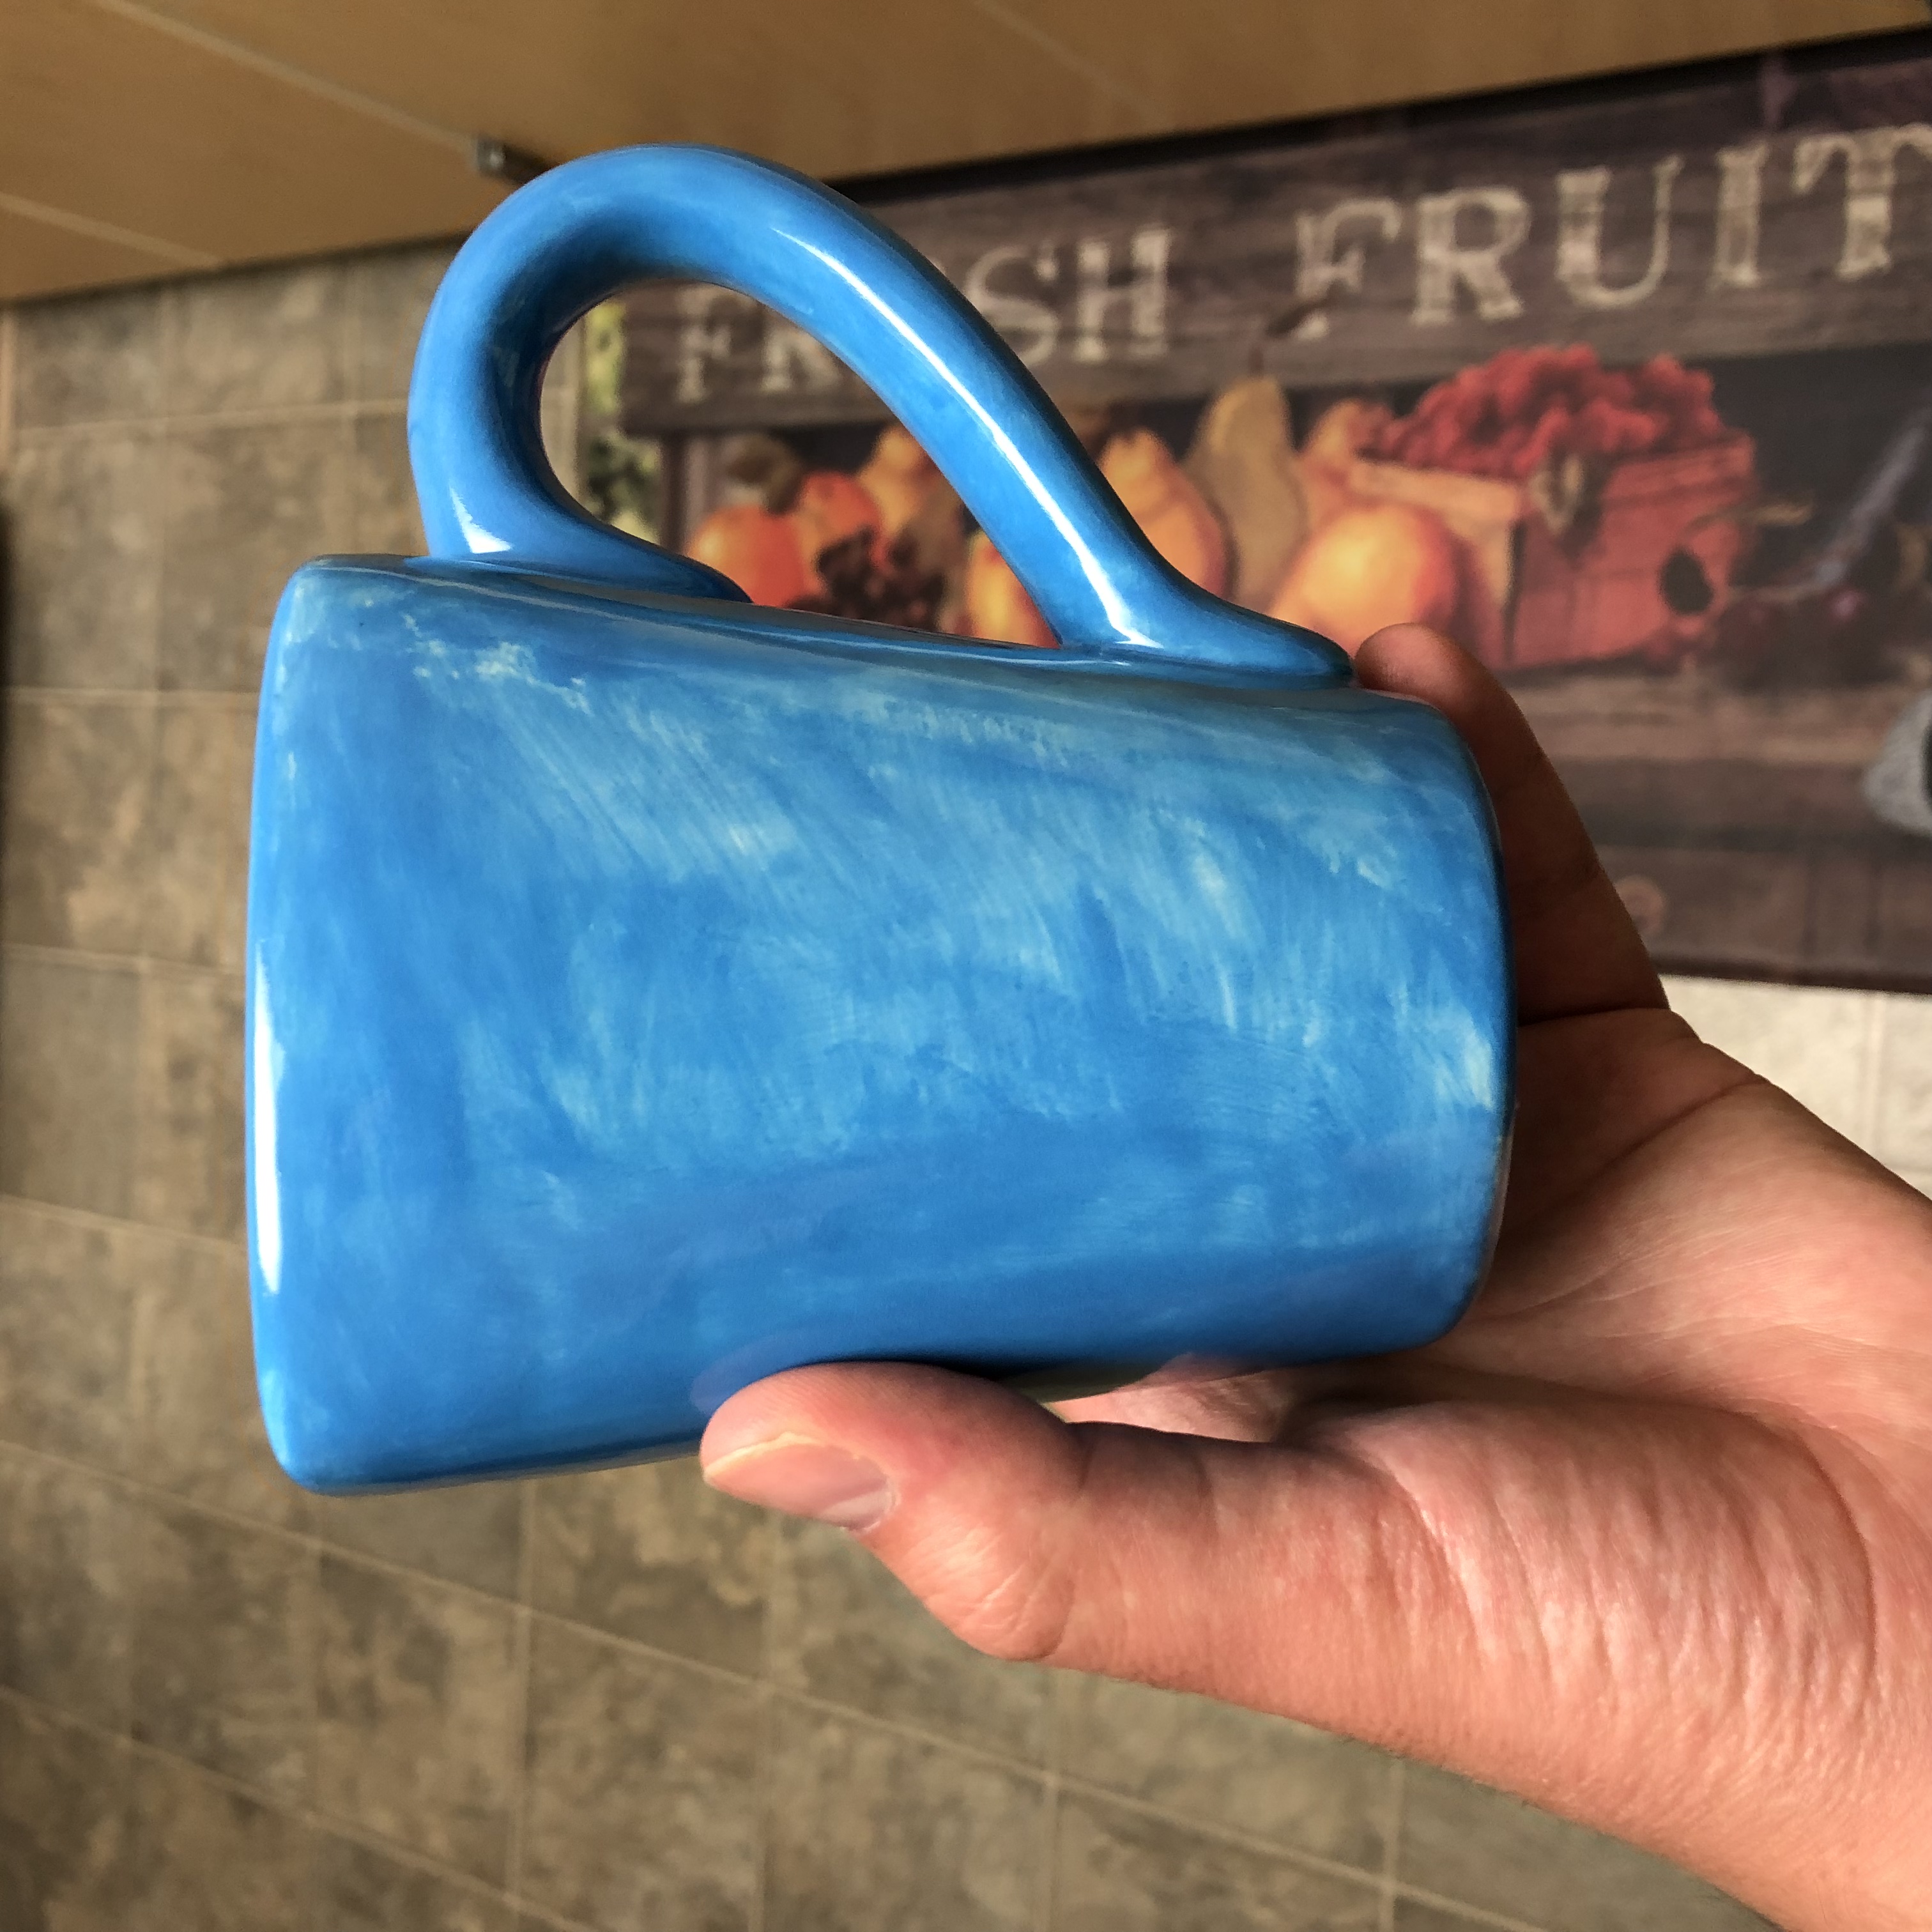 A poorly-painted blue mug